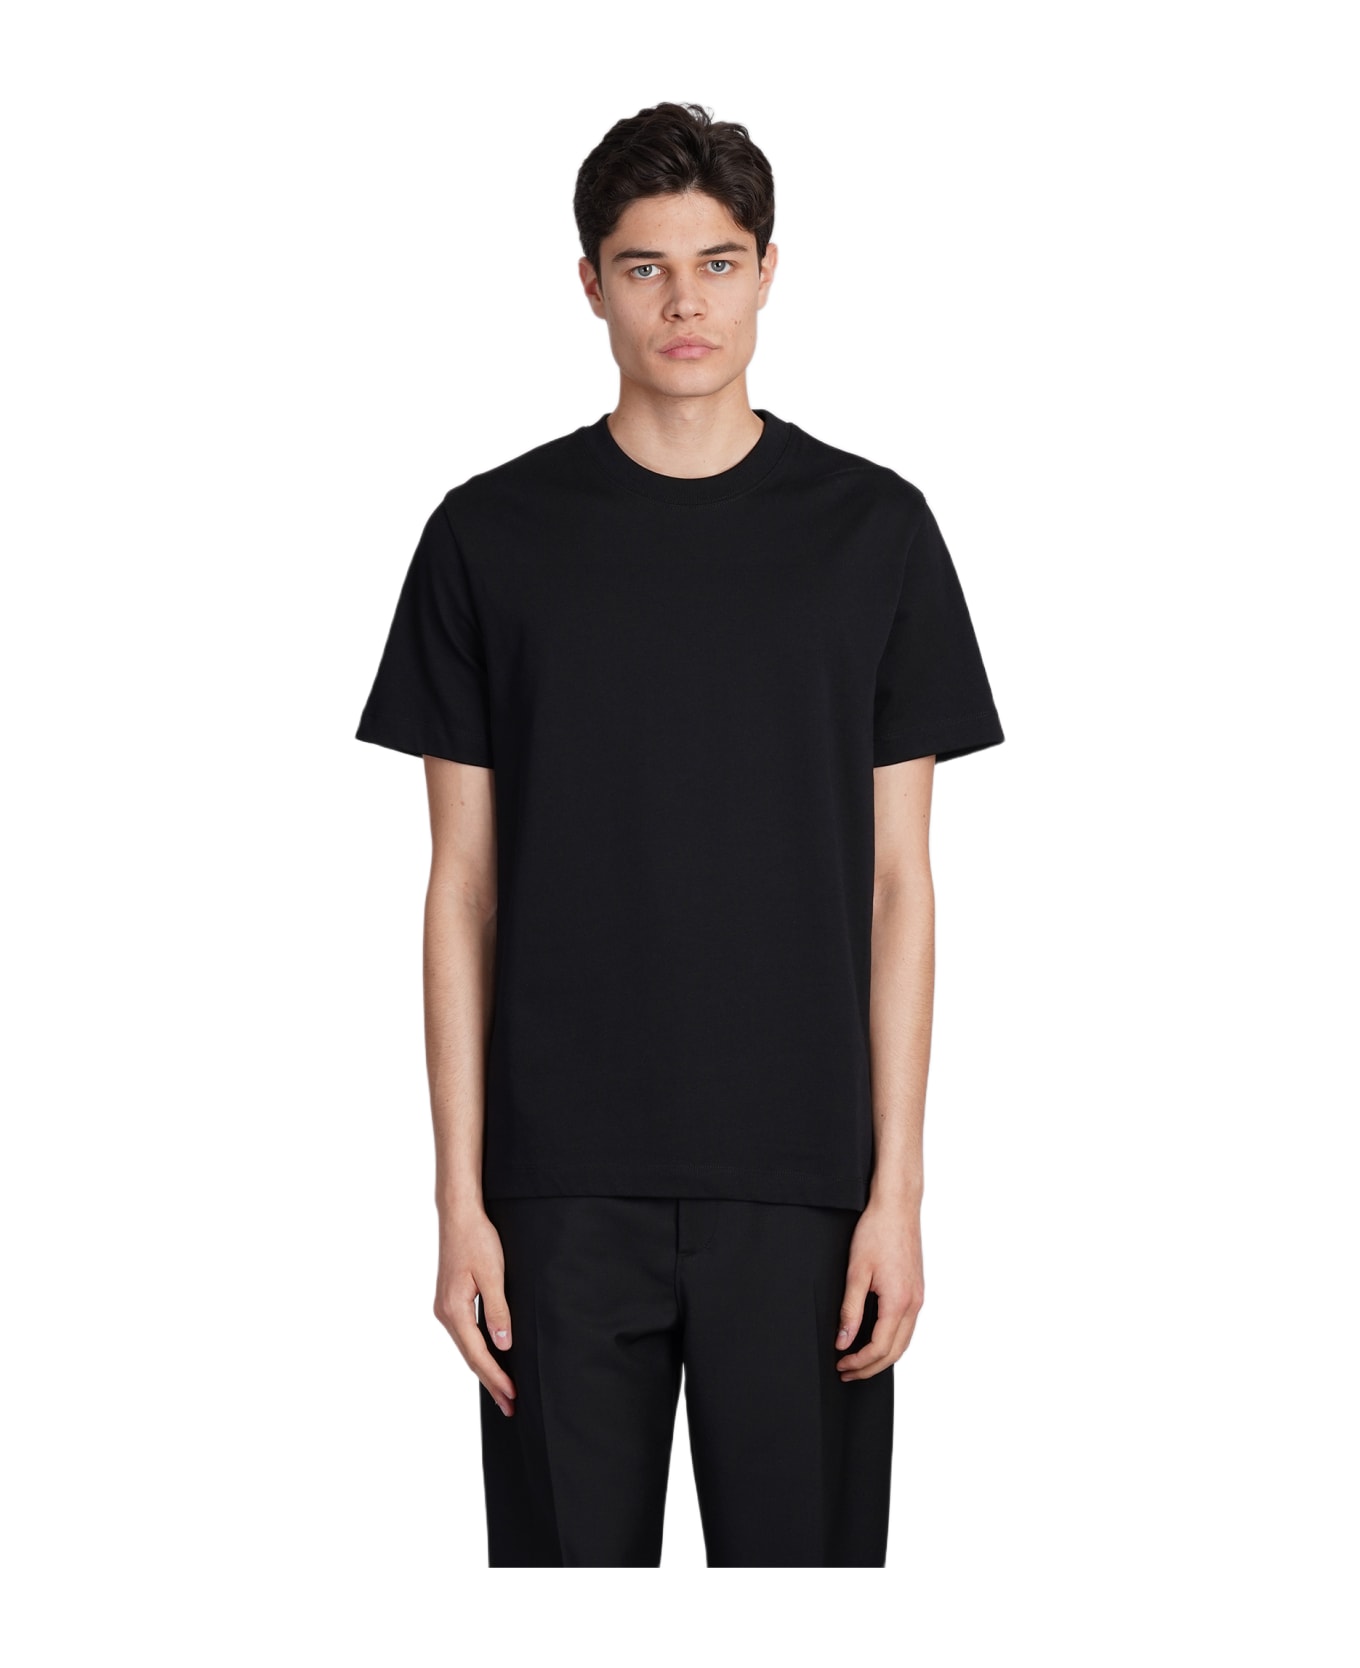 Helmut Lang T-shirt In Black Cotton - black